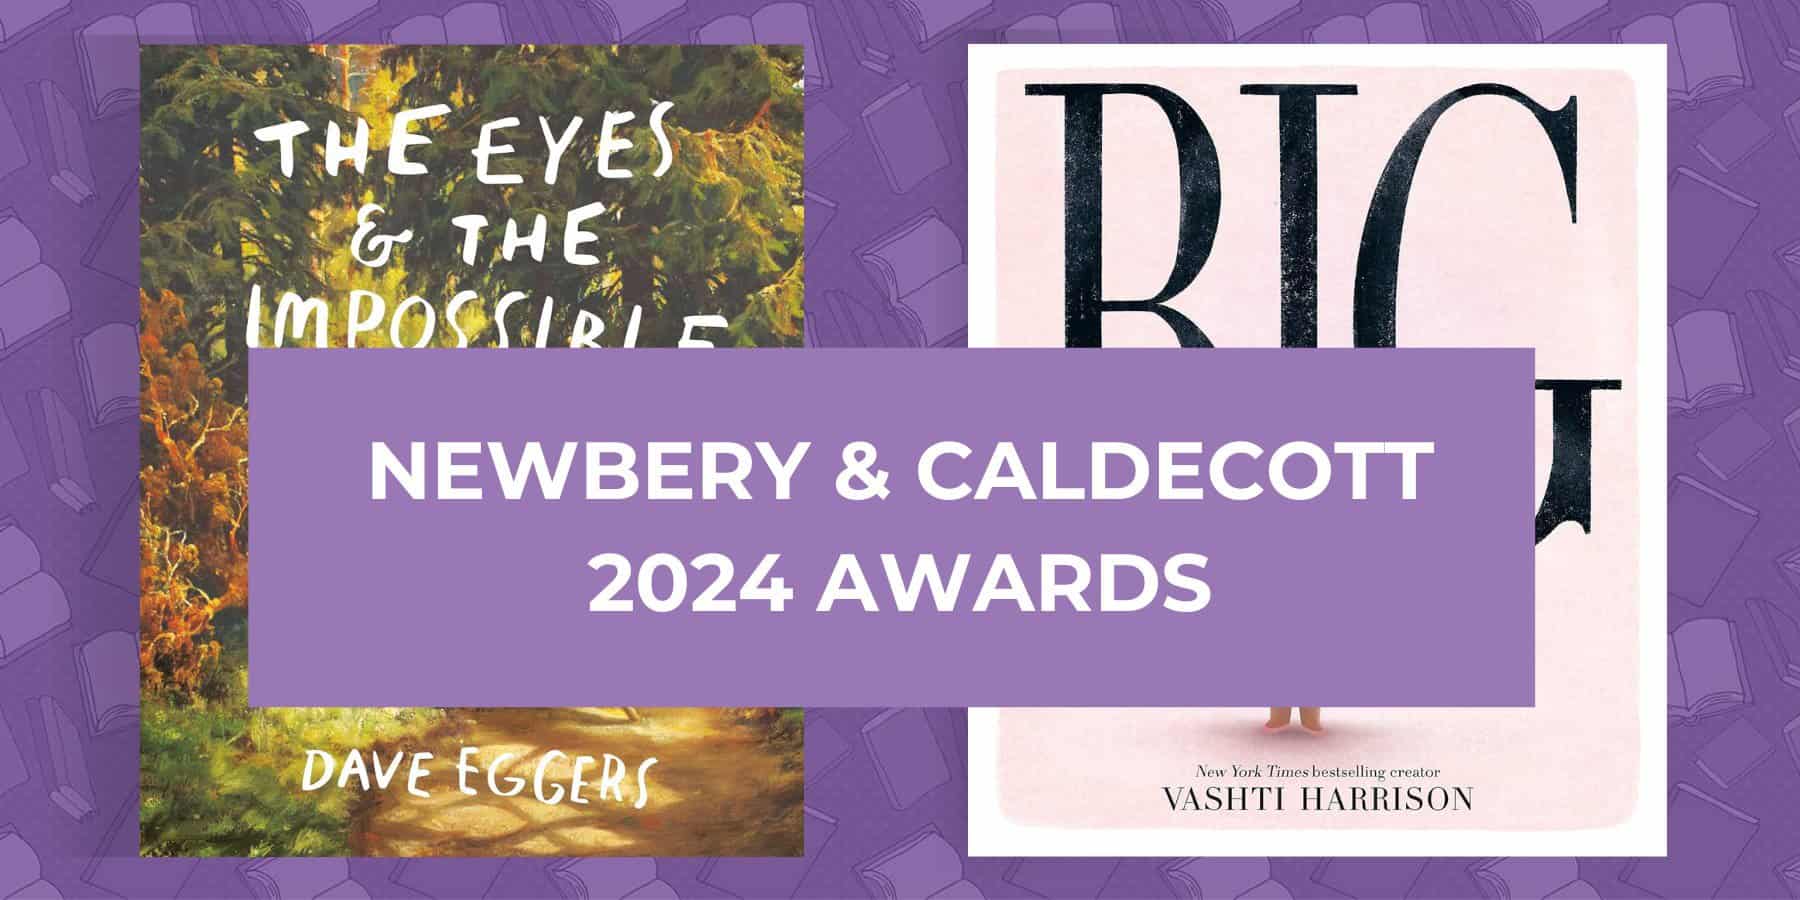 The Winners of the 2024 Newbery & Caldecott Awards